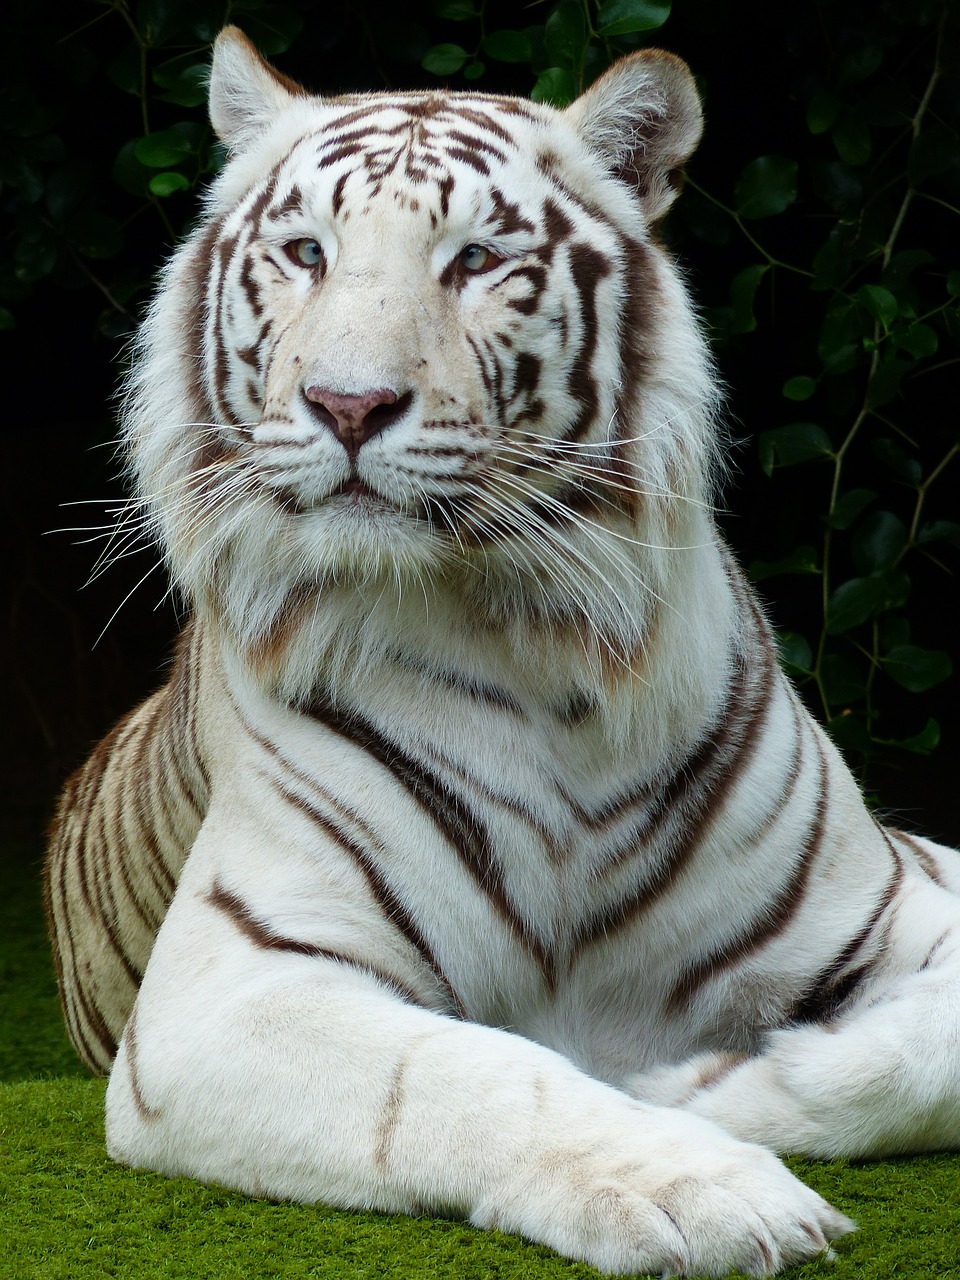 tiger face portrait free photo